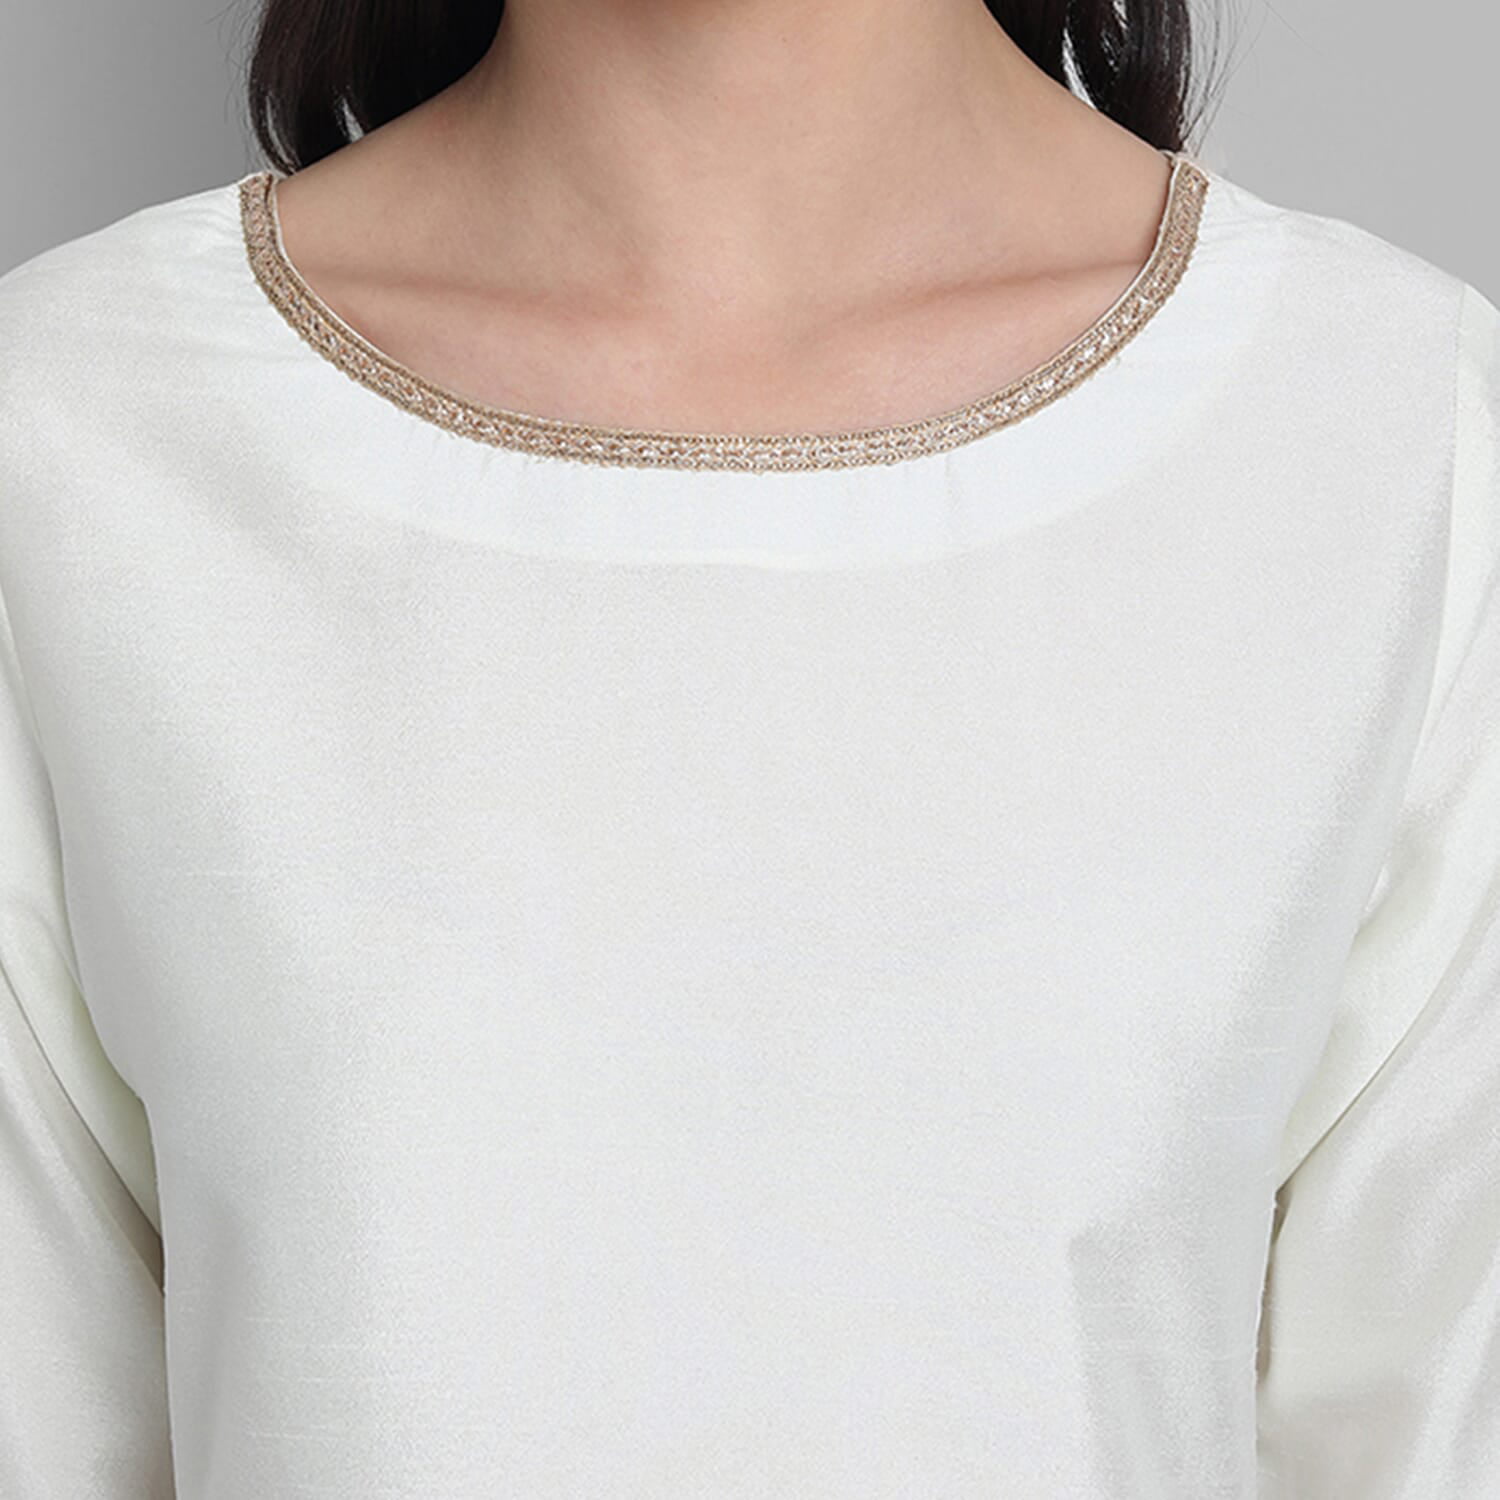 Buy Go Lucknow Women Cotton Chikankari White Collar Kurti at Amazon.in